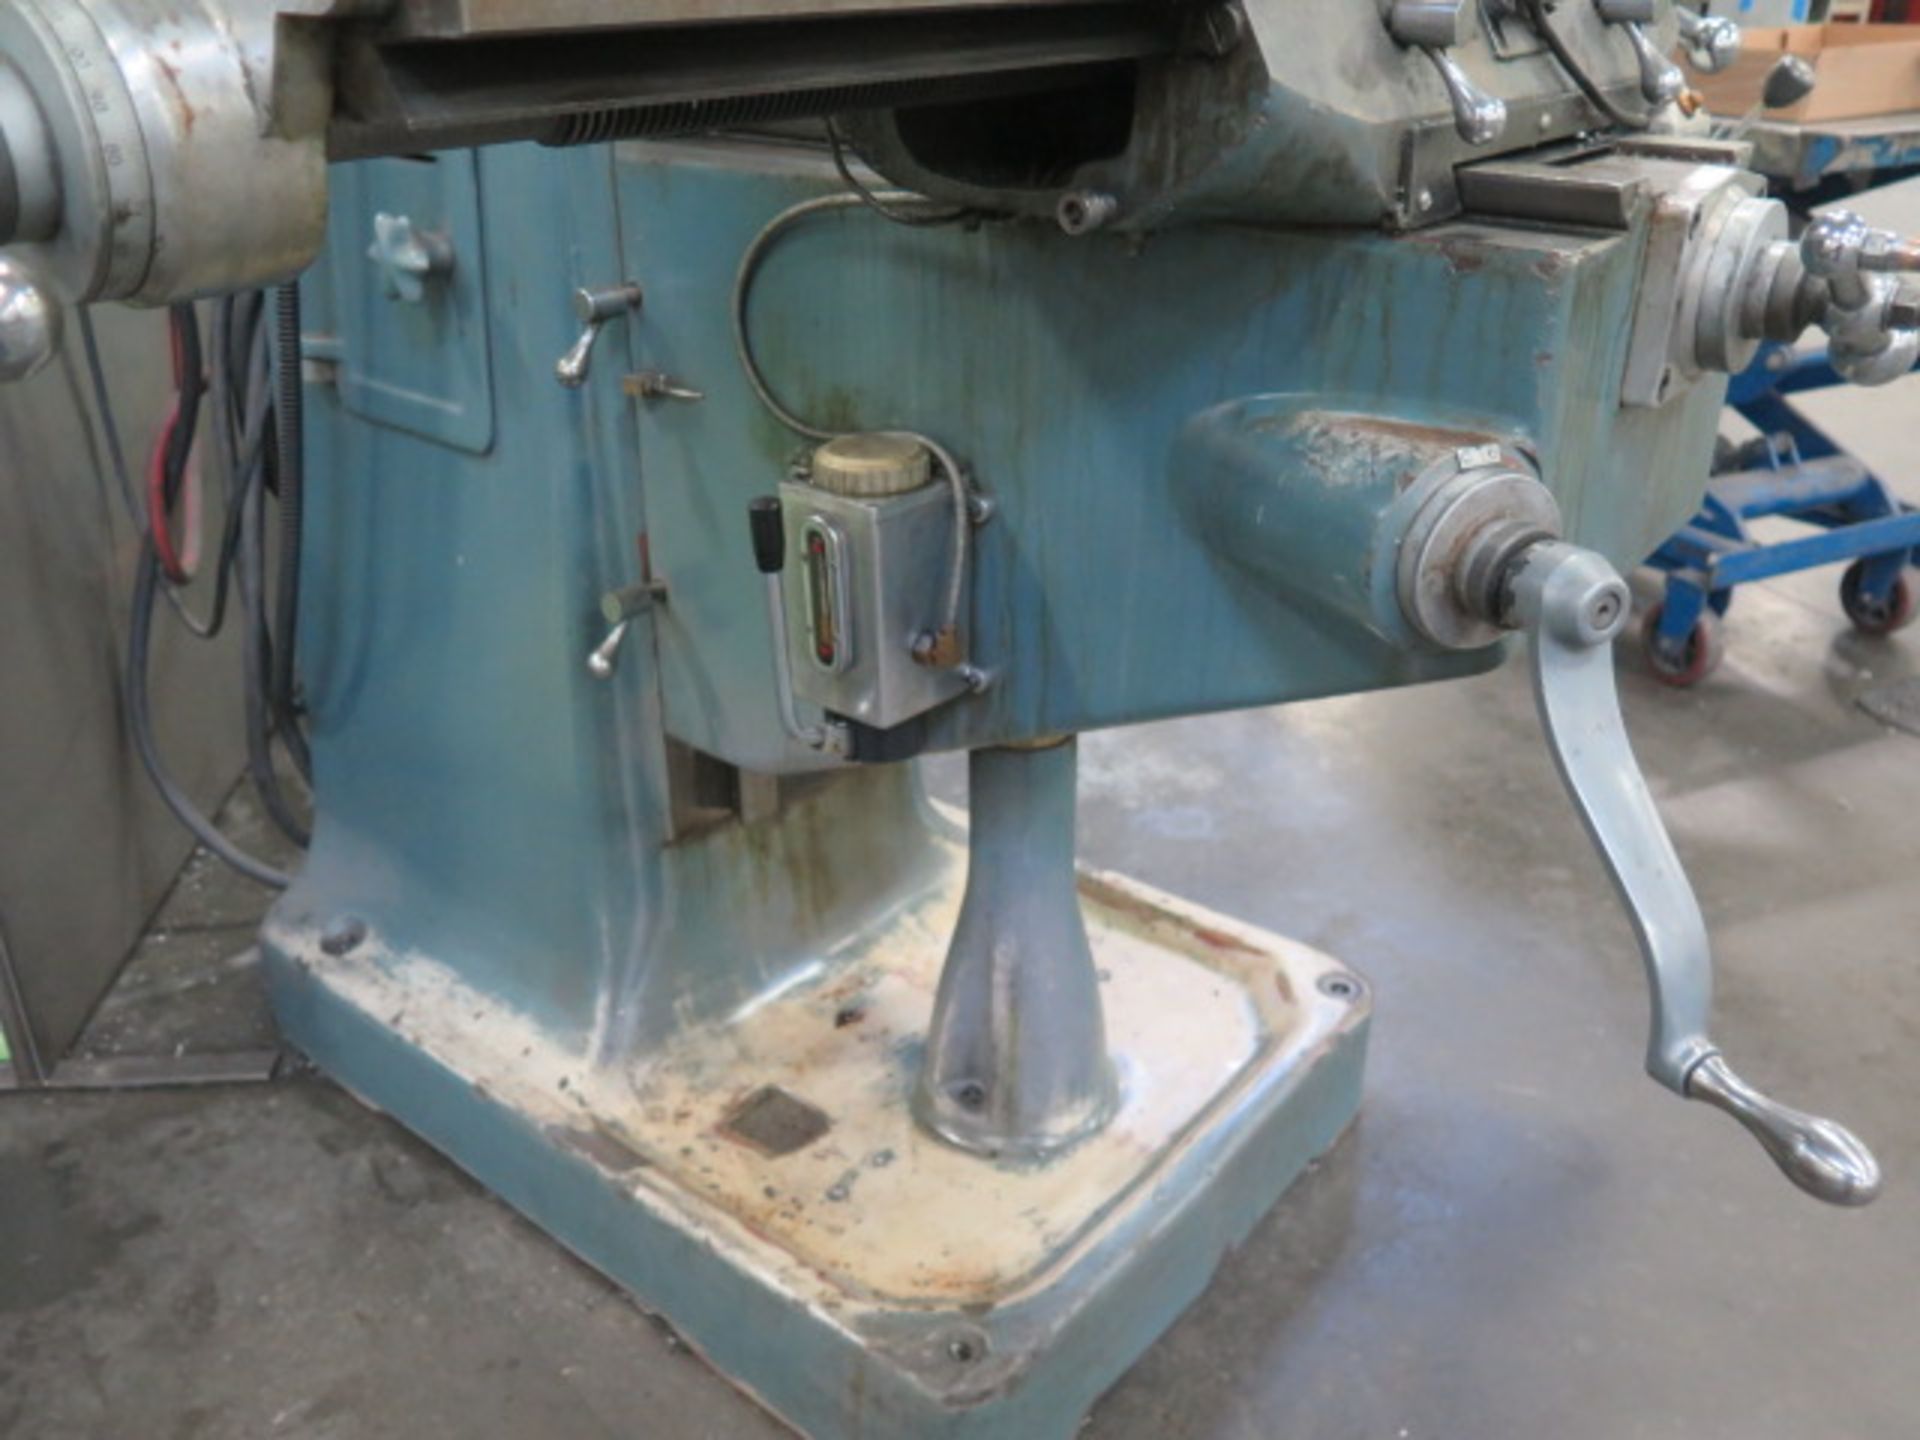 JBK Vertical Mill s/n K3V950609 w/ Newall Sapphire DRO, 3Hp Motor, 70-4200 Dial Change RPM - Image 10 of 12